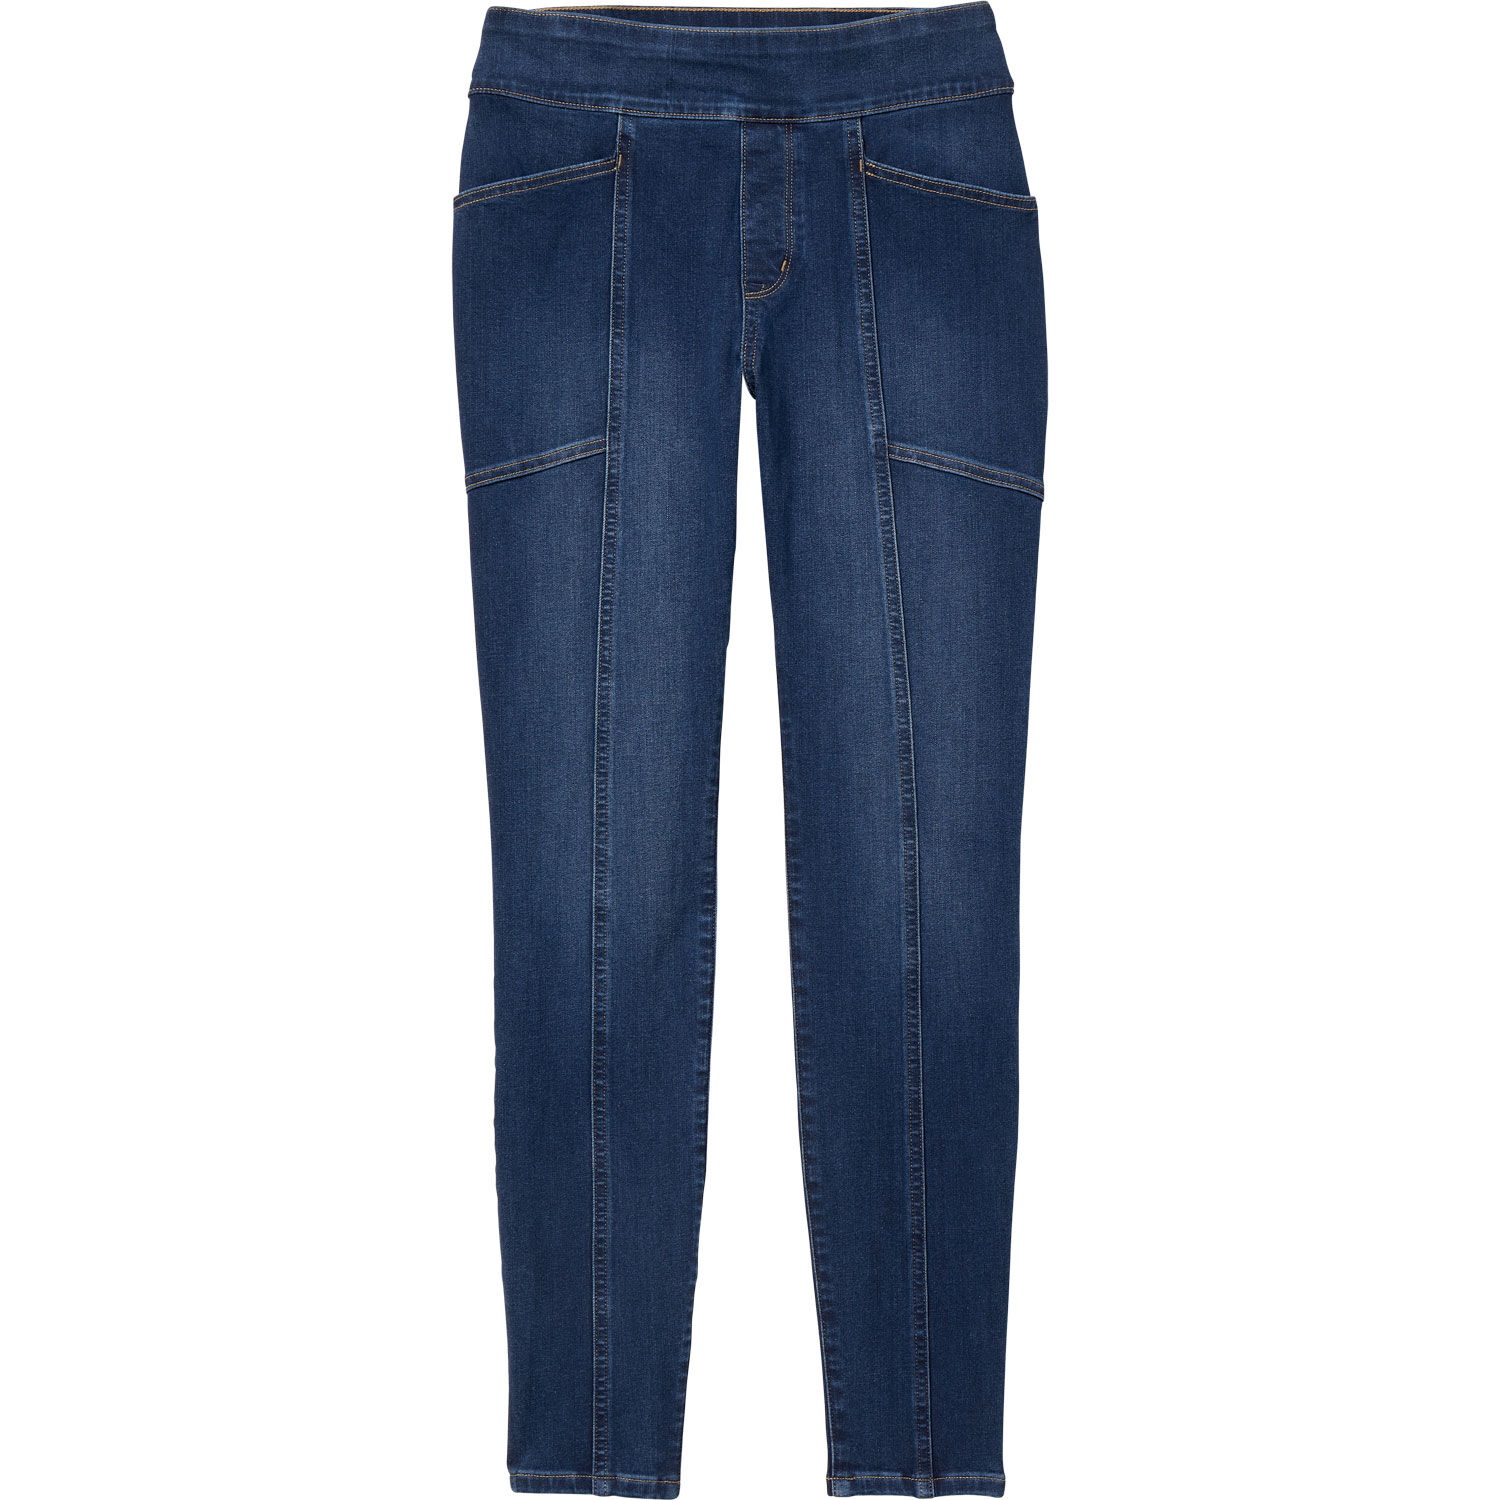 Kliou Cotton Aesthetic Flower Print Jeans Women Casual High Waist All Match  SKinny Denim Streetwear Pant